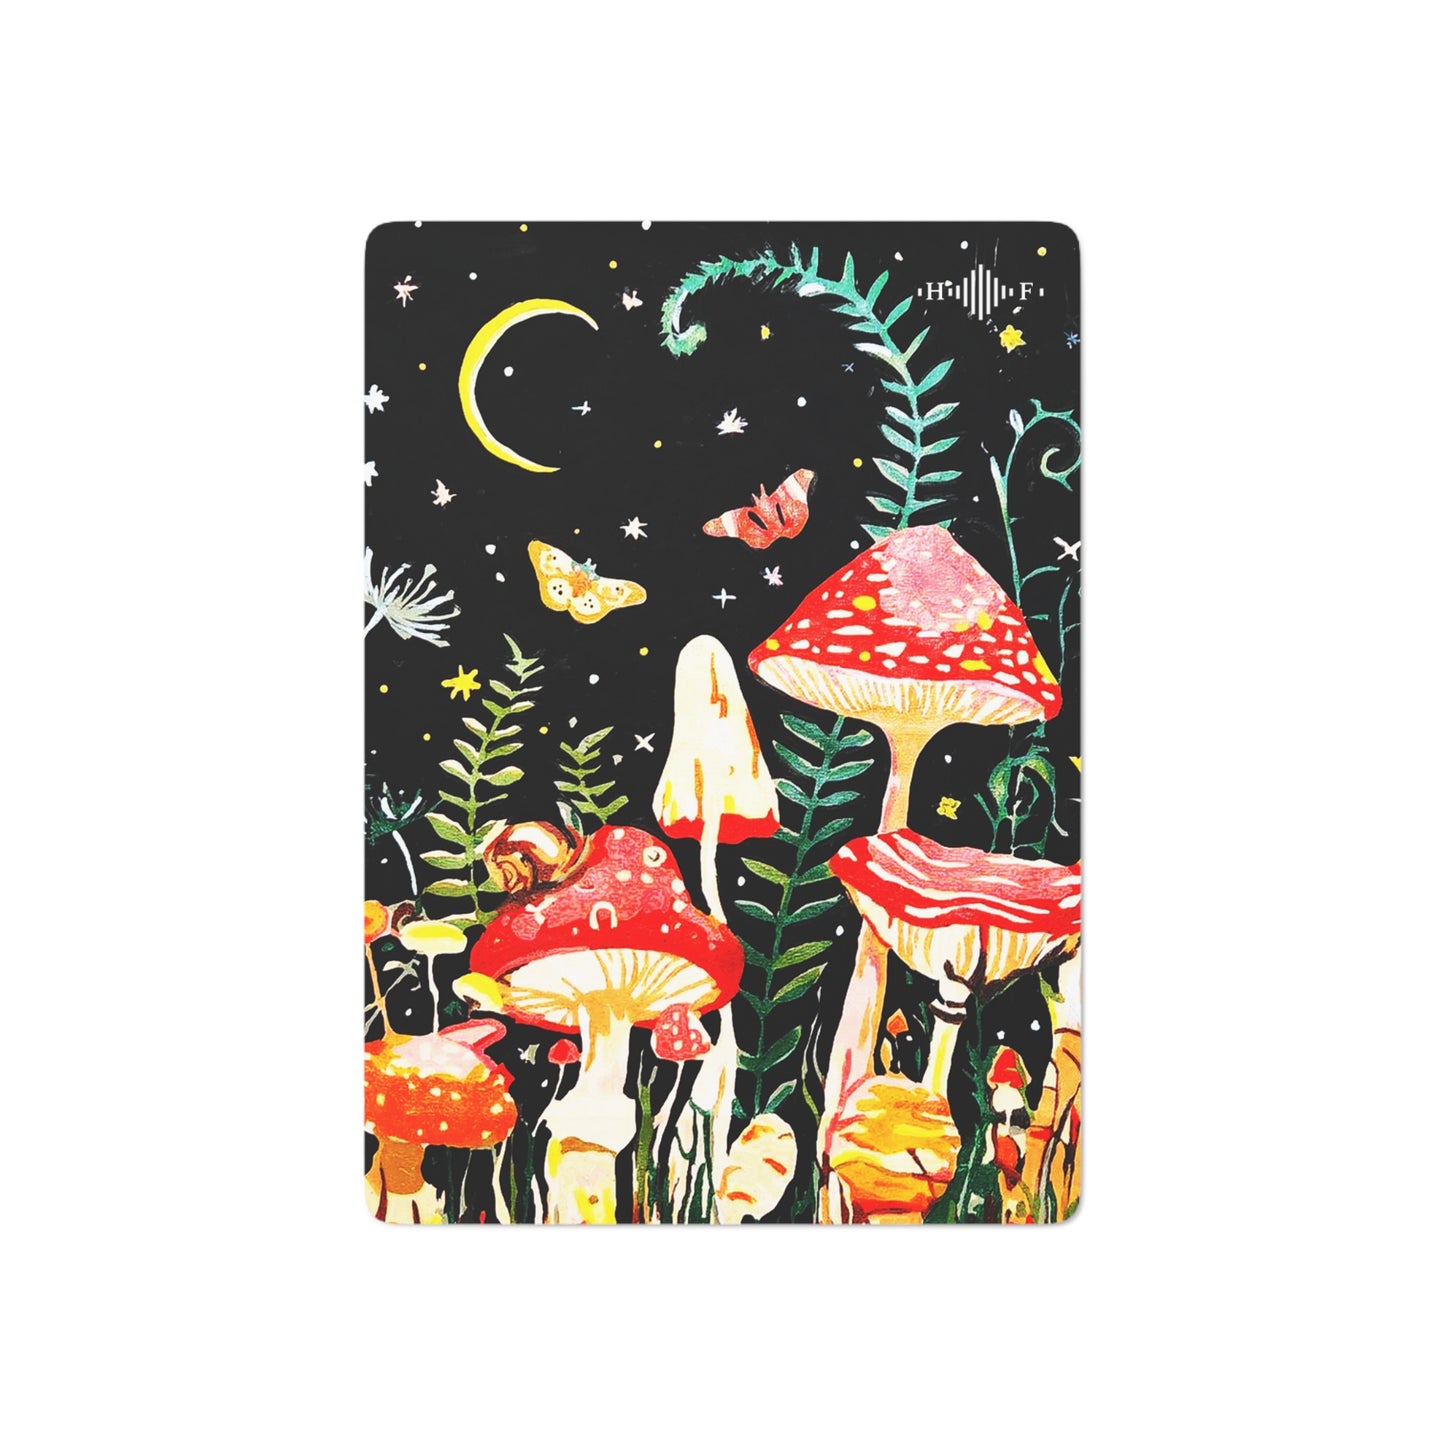 Mushroom Nights Playing Cards